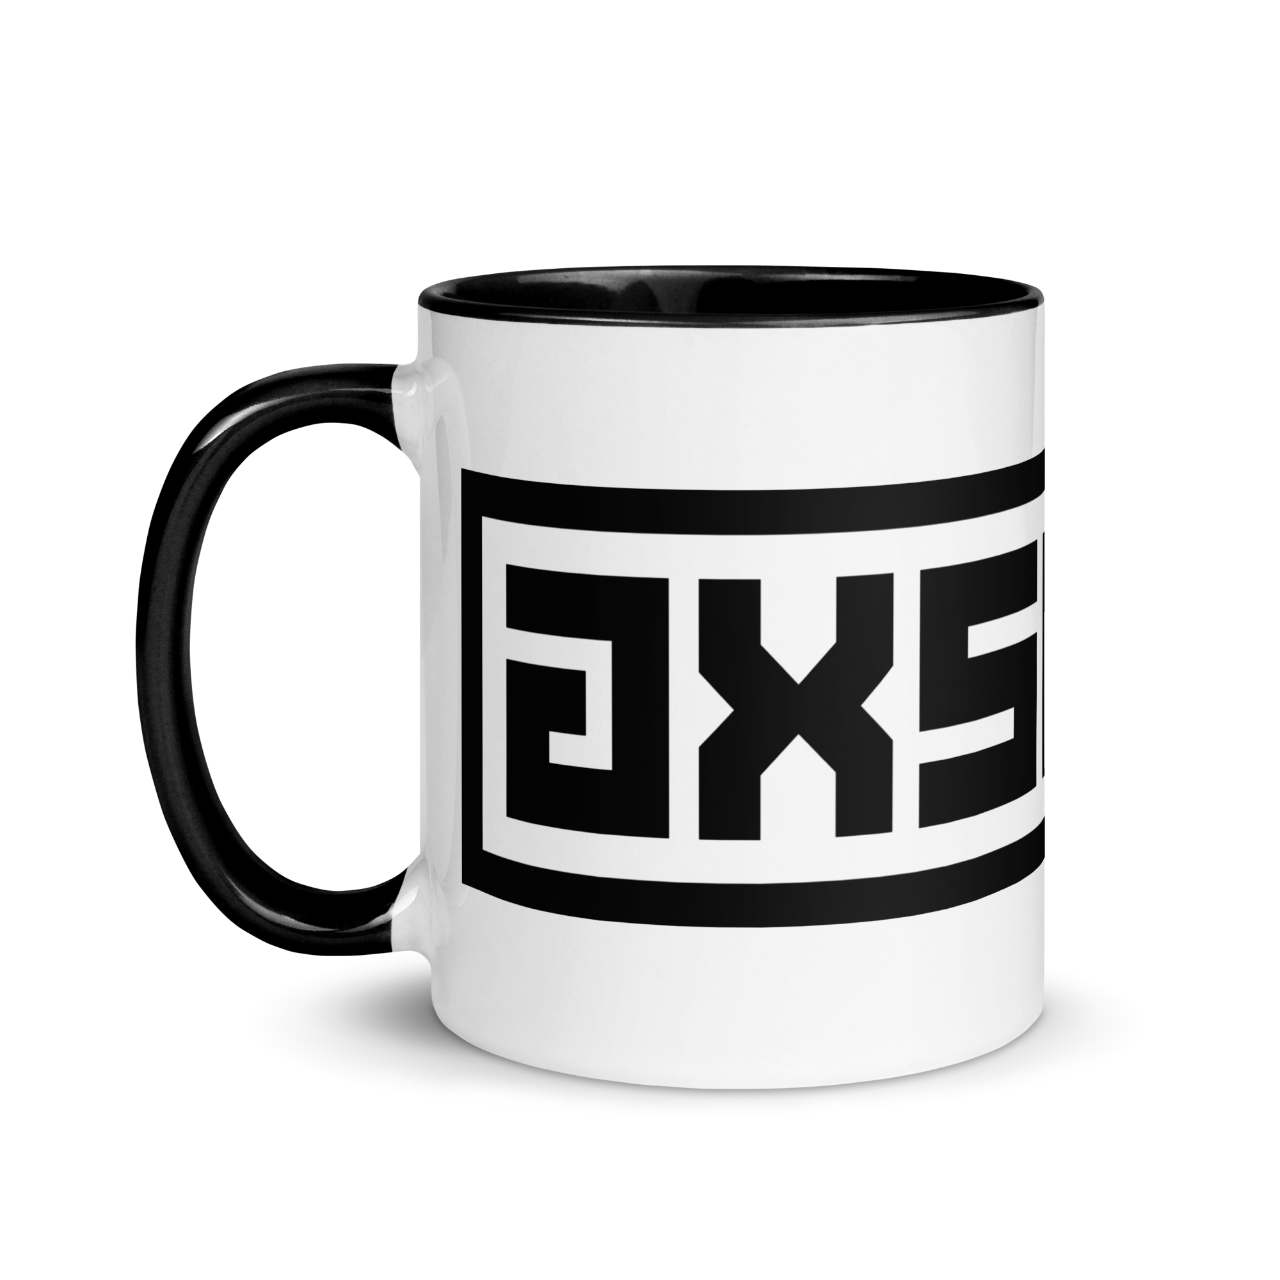 axsgtr axess electronics guitar music industry branded merchandise swag black white ceramic coffee mug 11oz